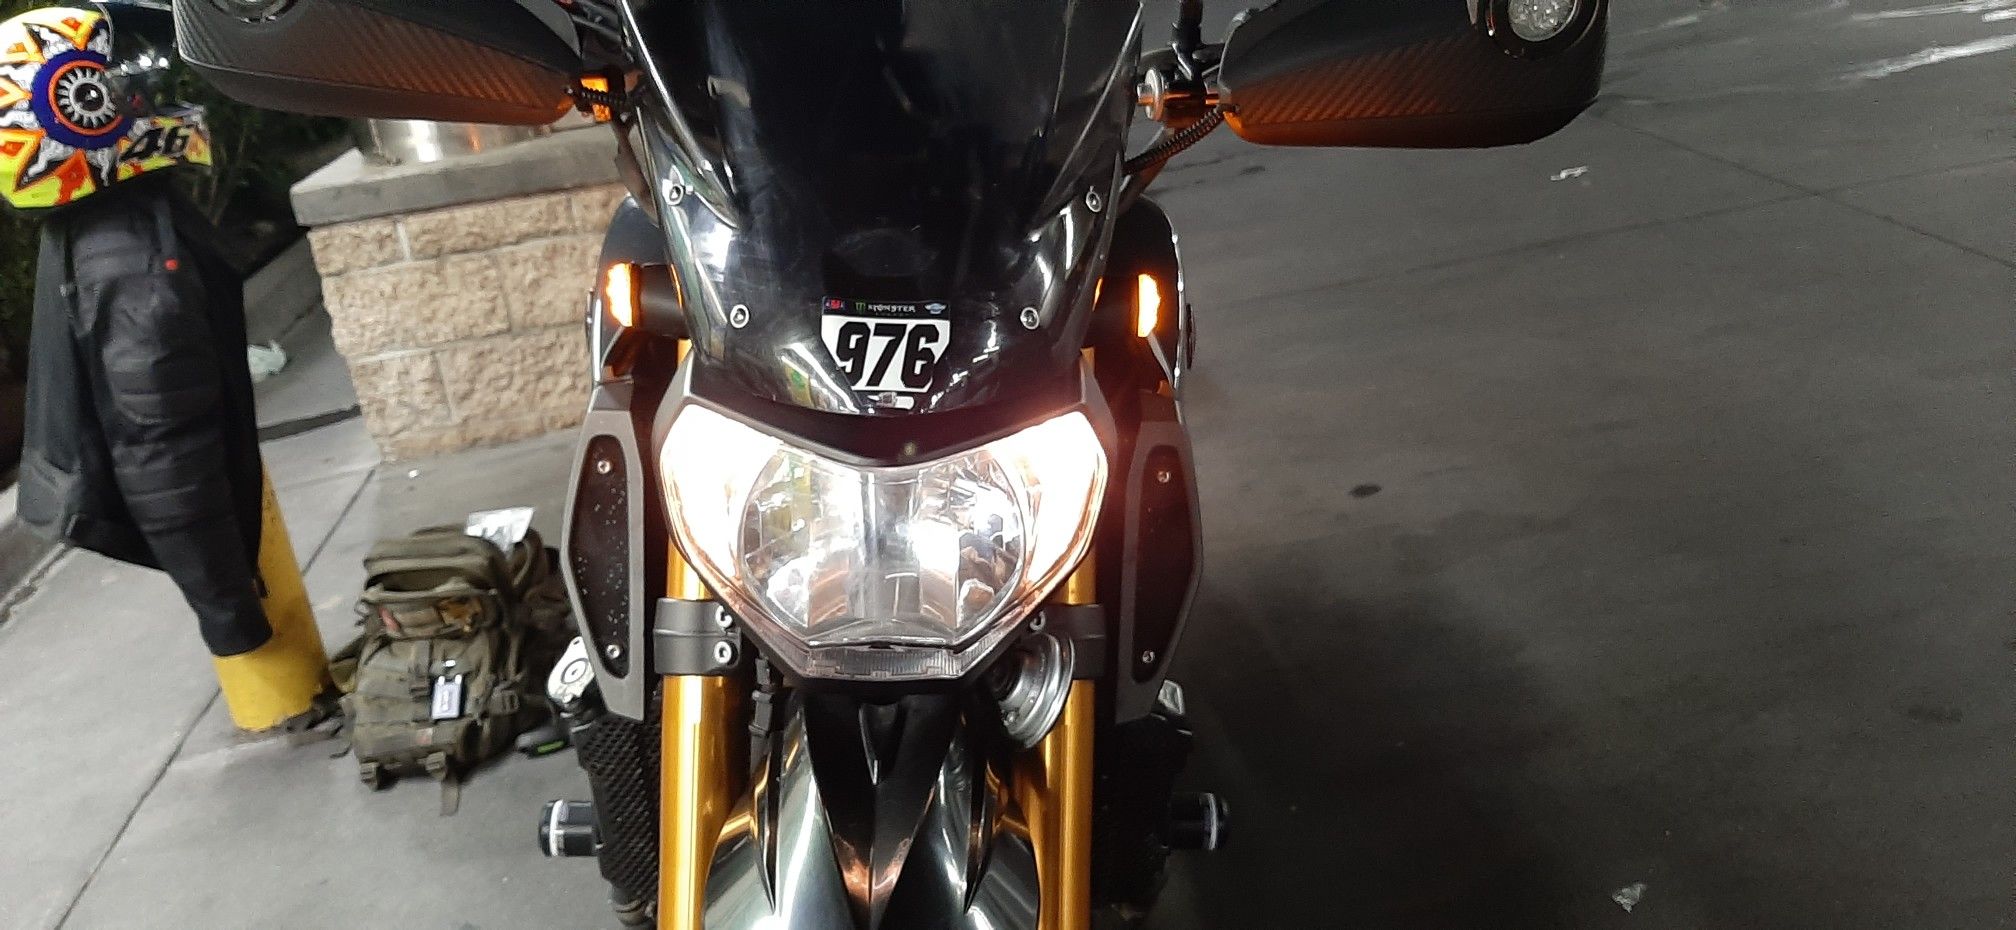 2014 Yamaha fz09 mt09 motorcycle